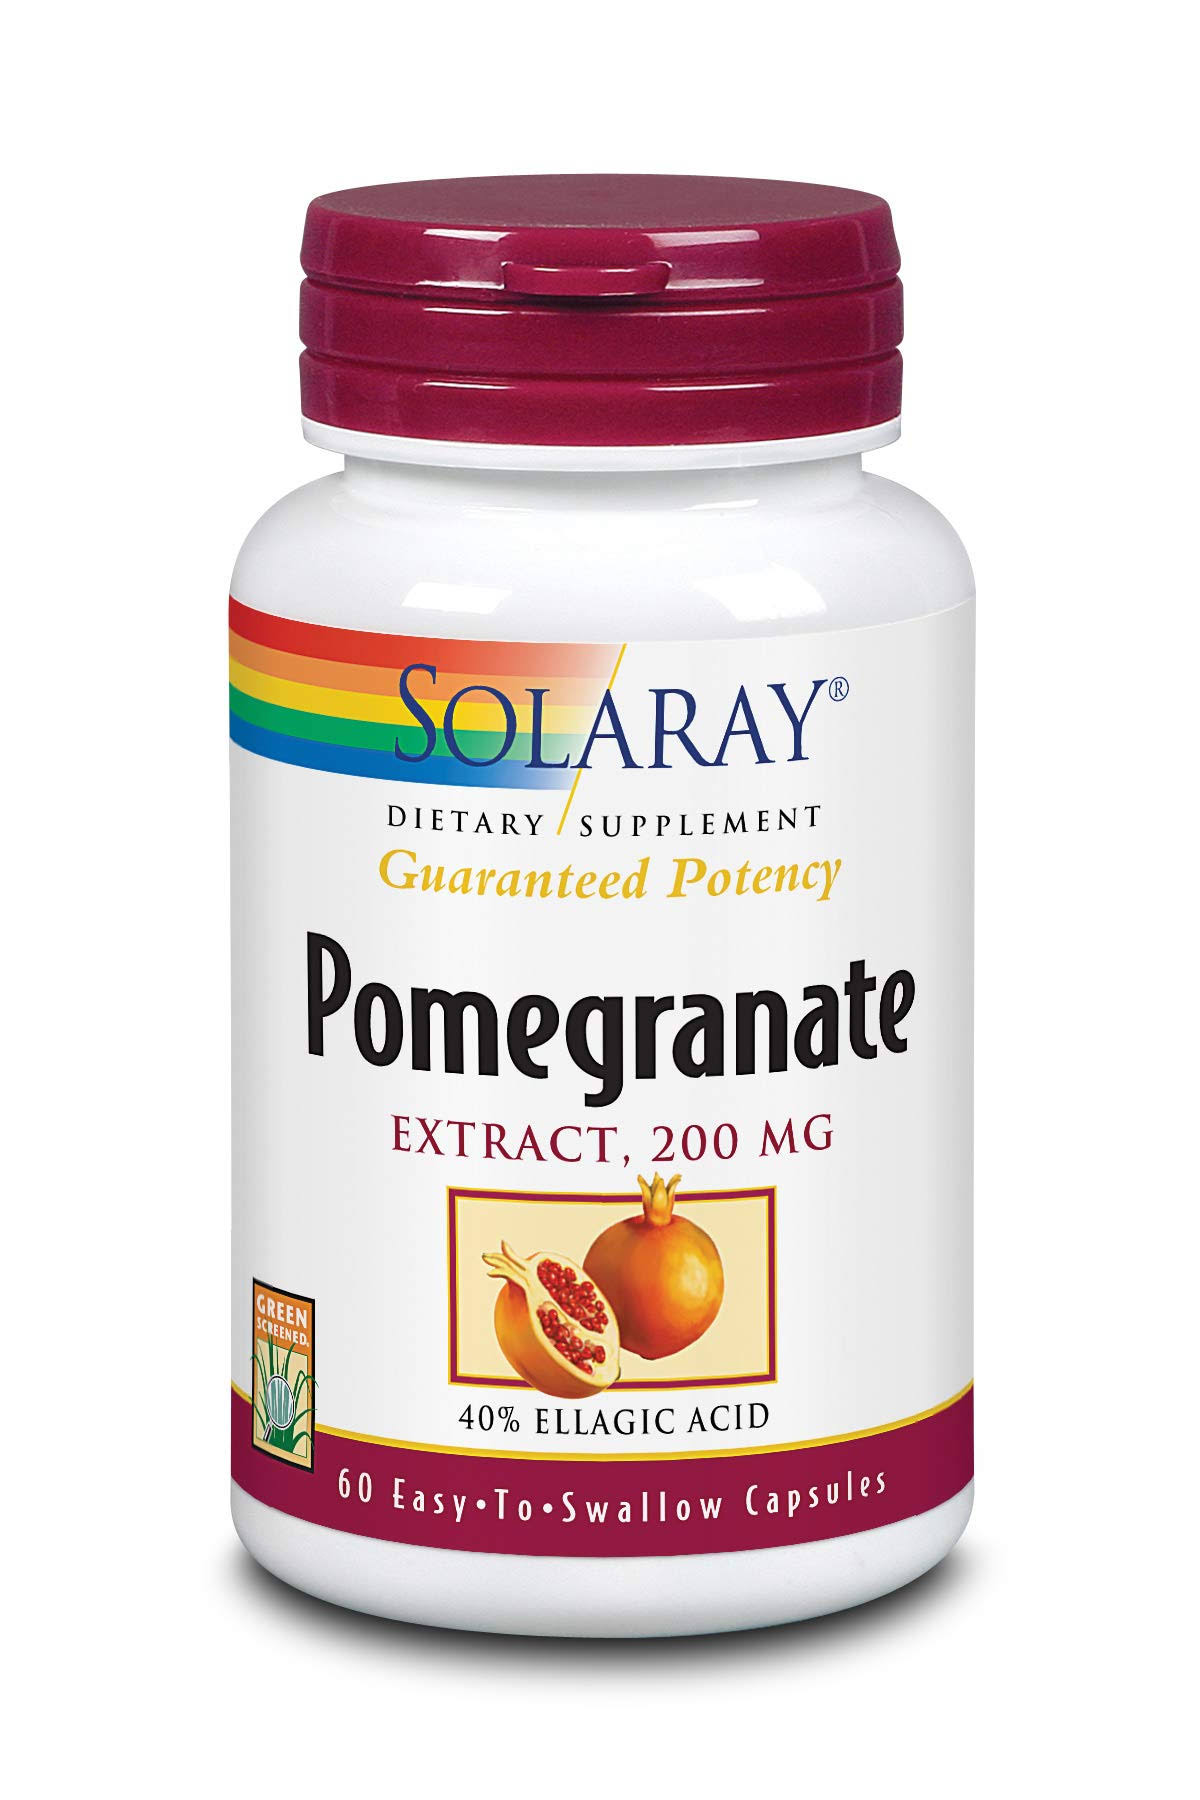 Solaray Pomegranate Extract 200mg Dietary Supplement - 60 Capsules